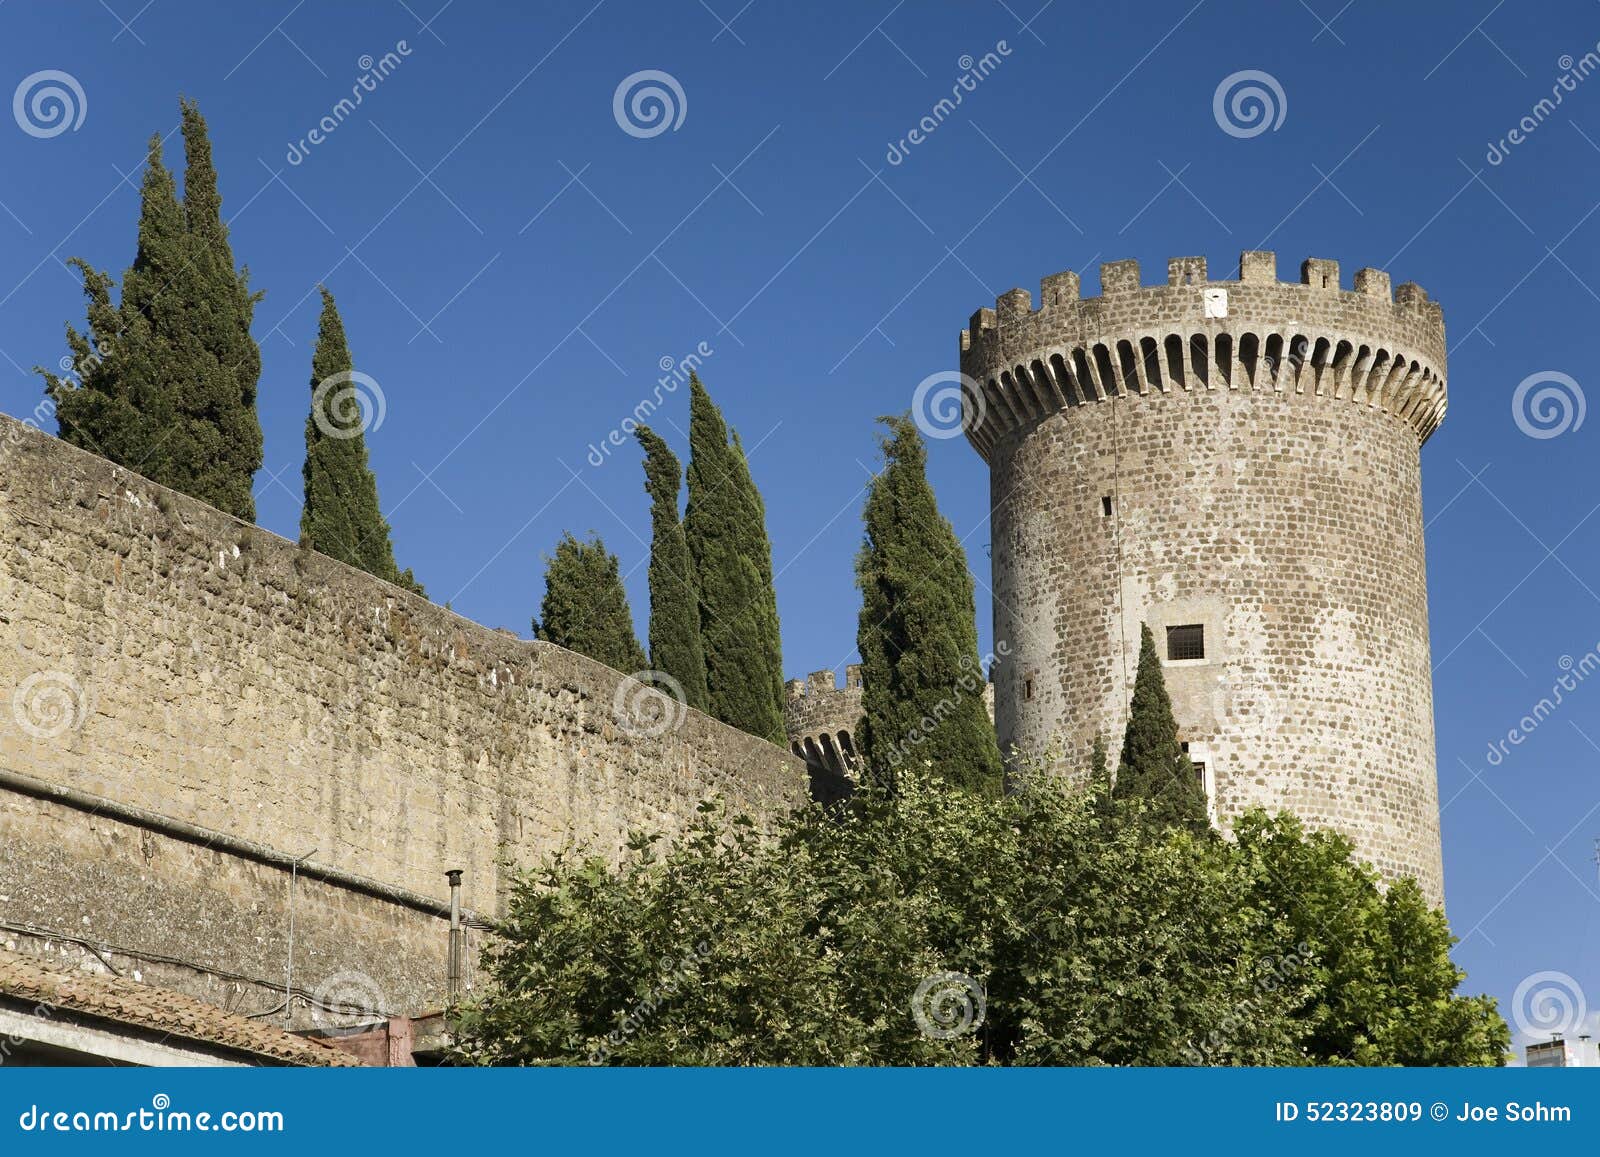 tivoli castle, or castle of rocca pia, built in 1461 by pope pius ii, tivoli, italy, europe